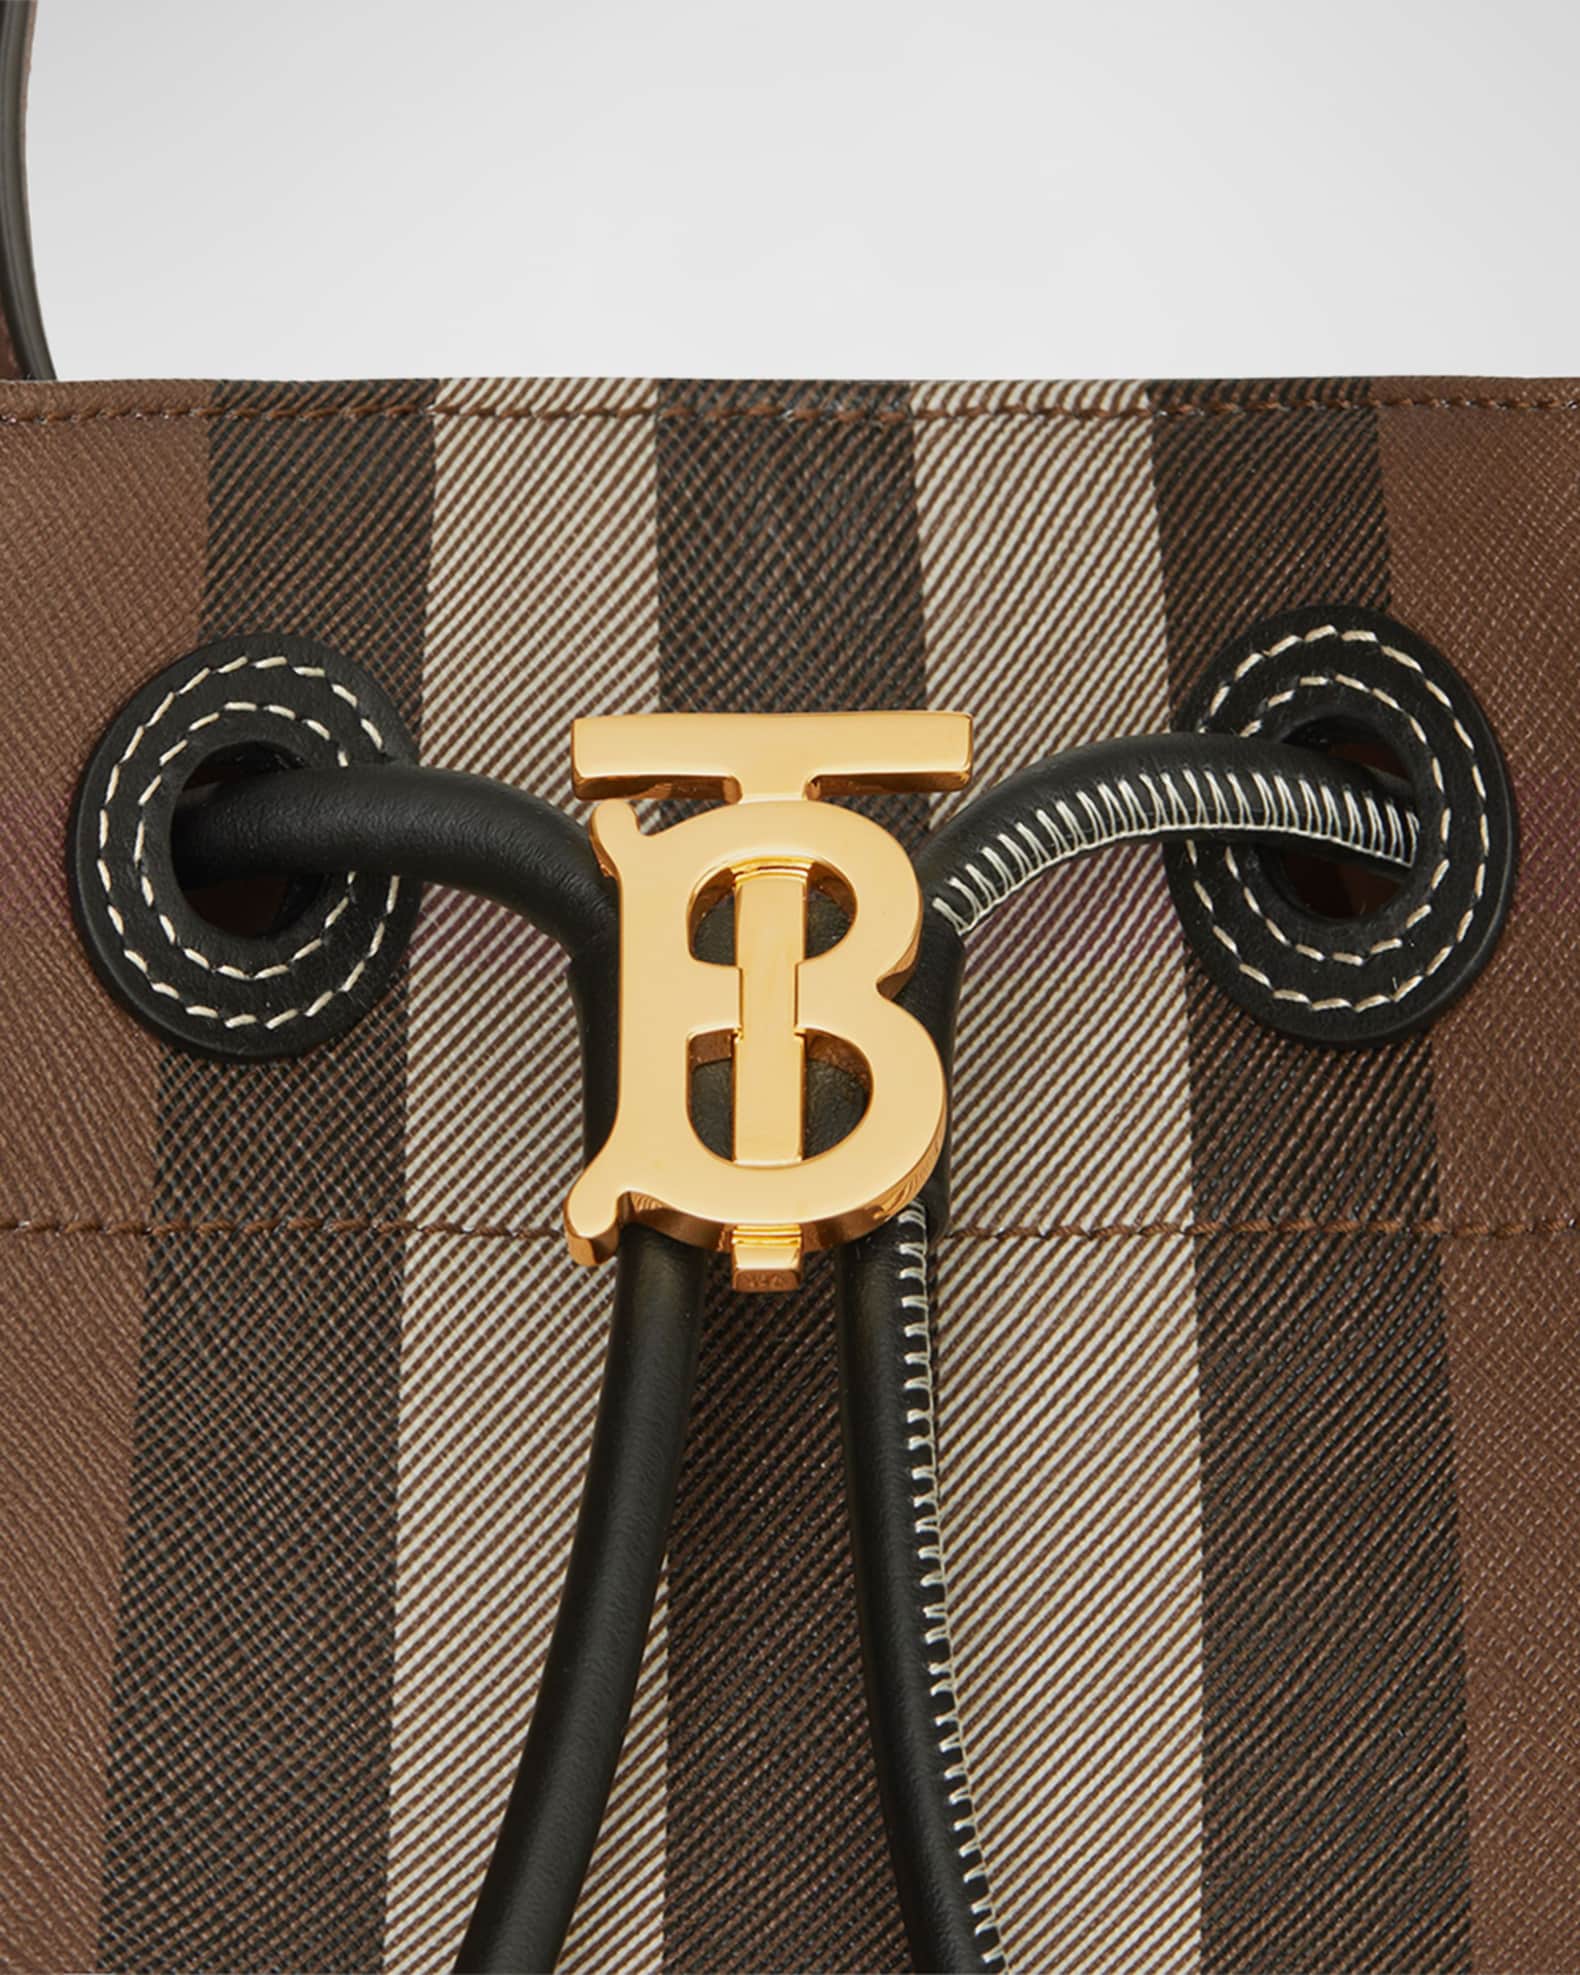 Burberry Small Check Knit Drawstring Bucket Bag